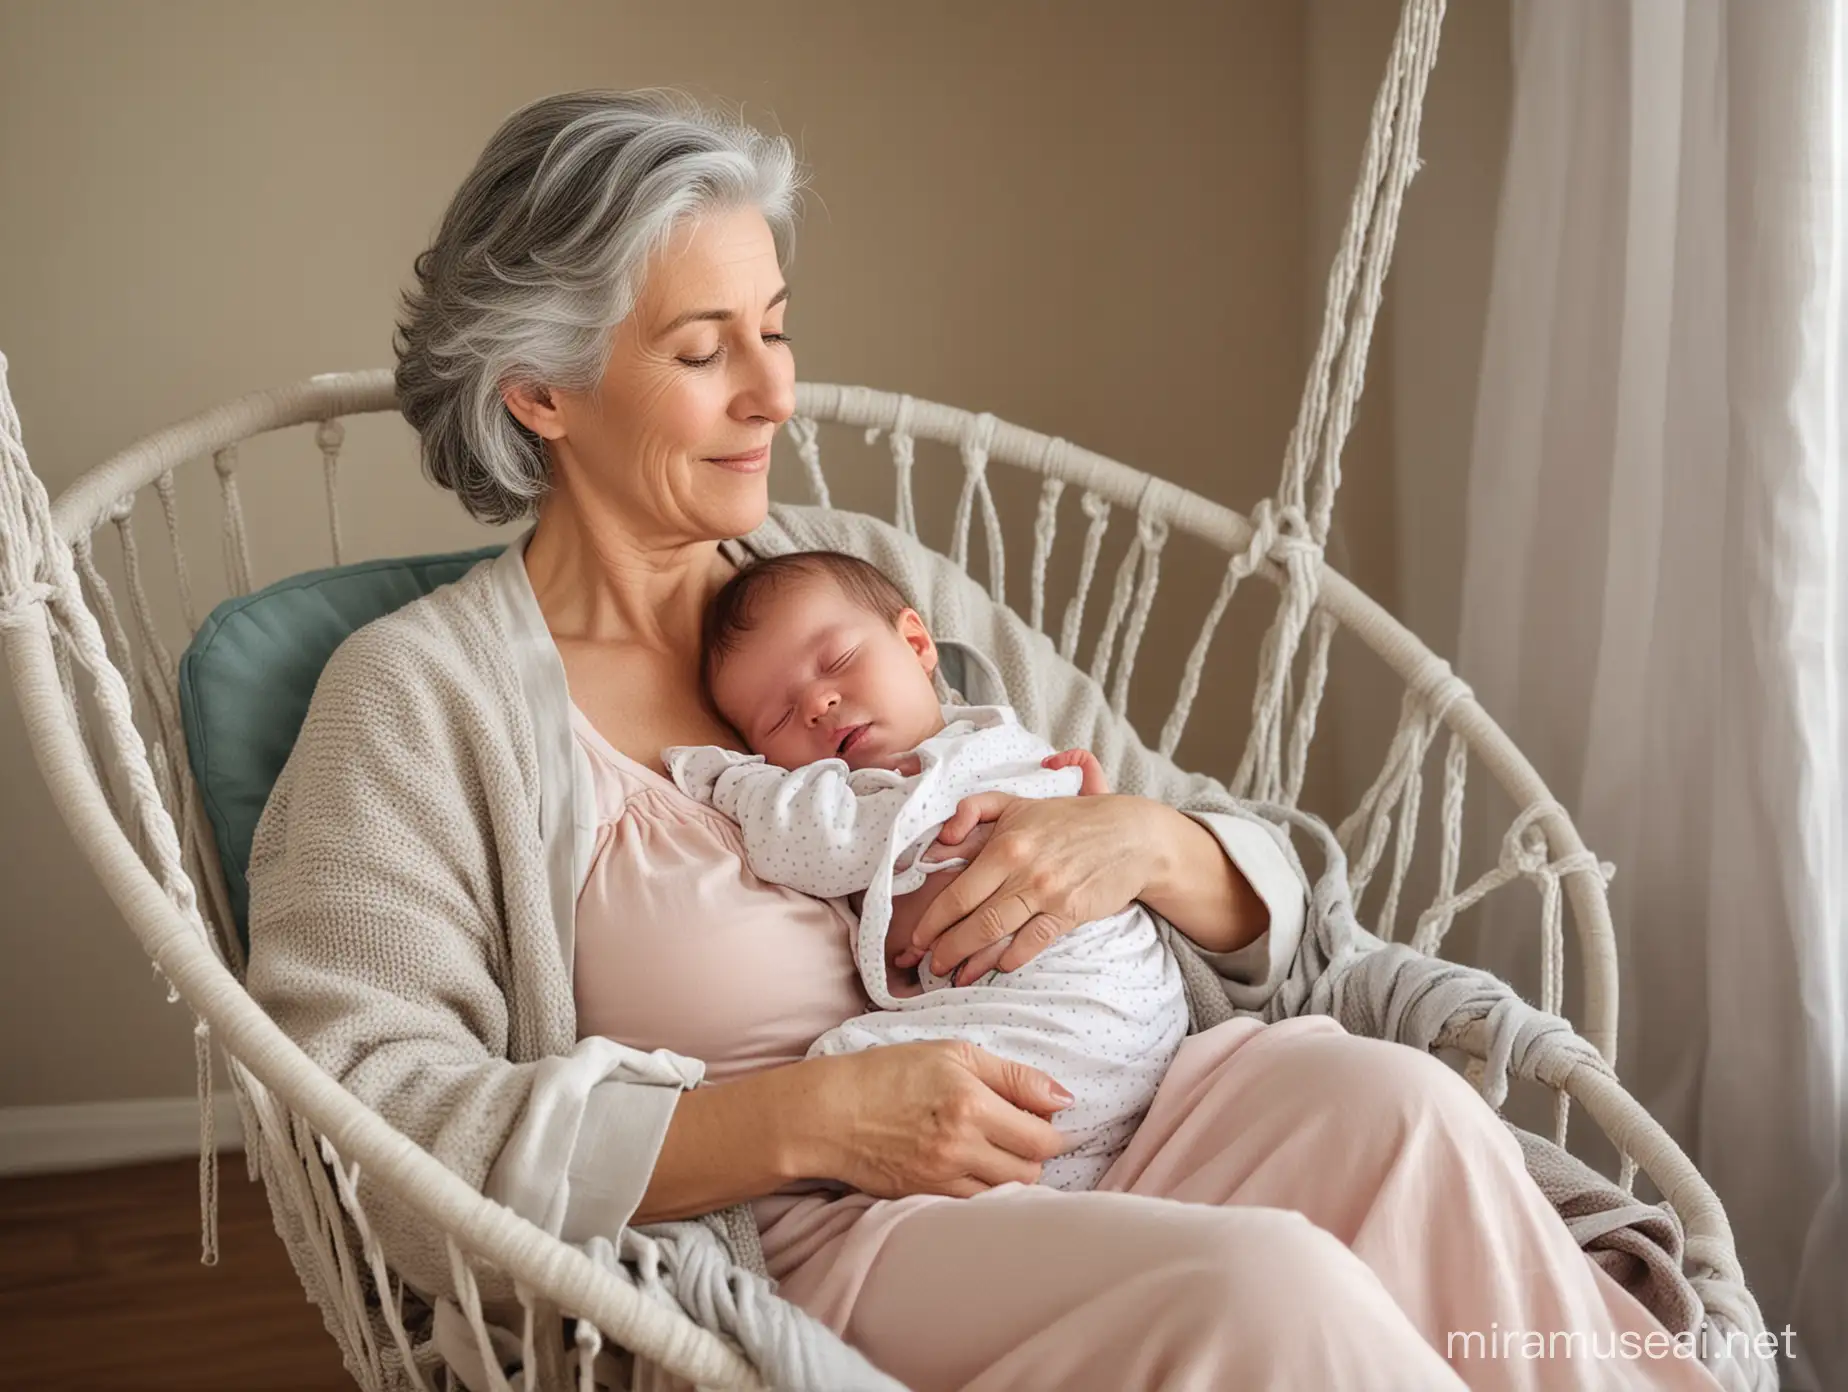 Elderly Woman Breastfeeding Newborn in Swing Chair